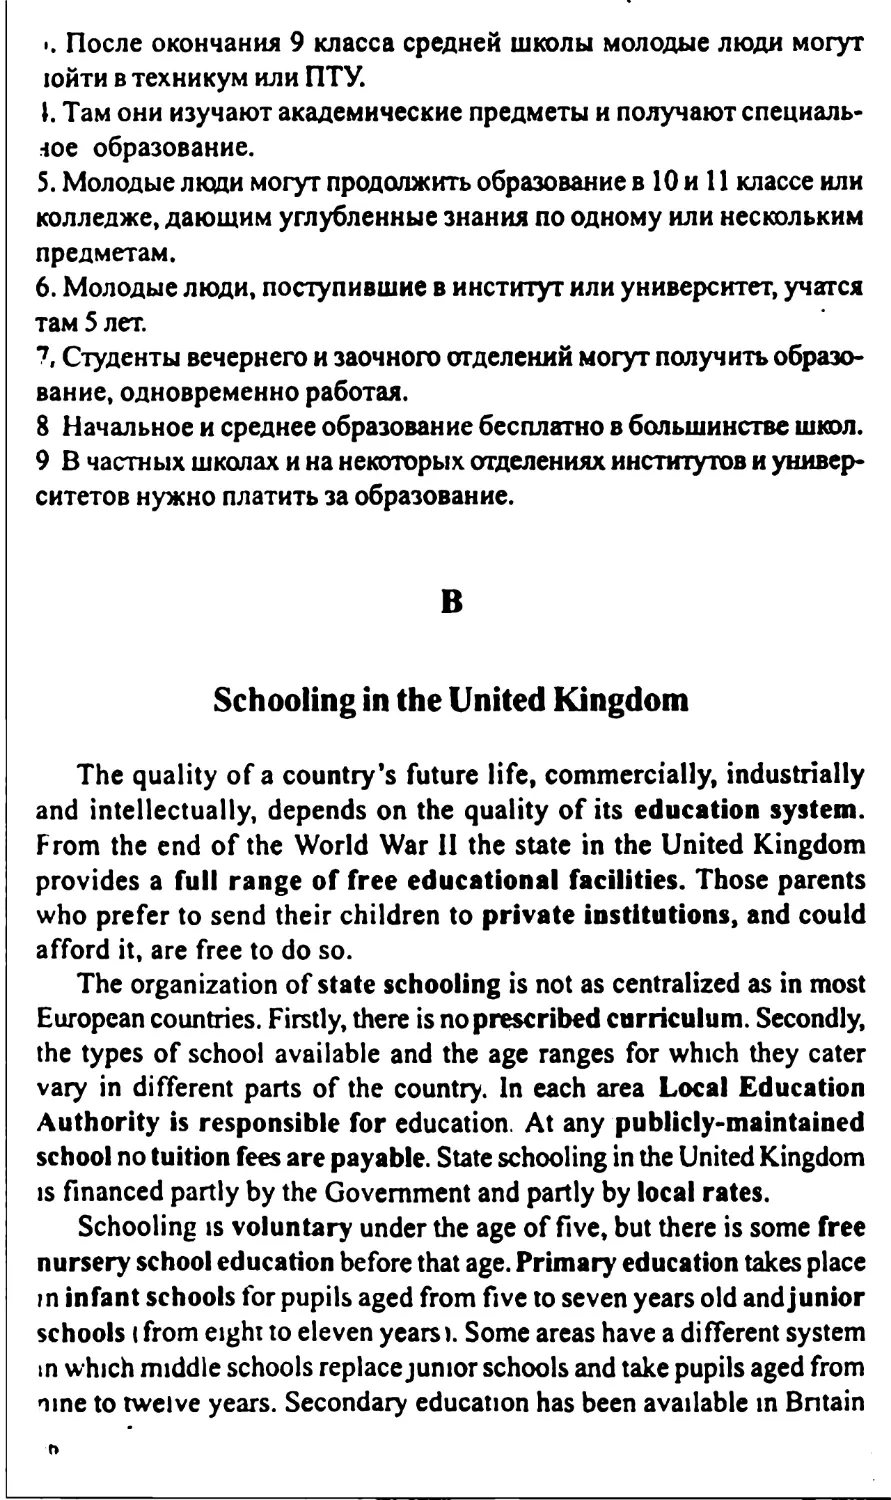 B. Schooling in the United Kingdom